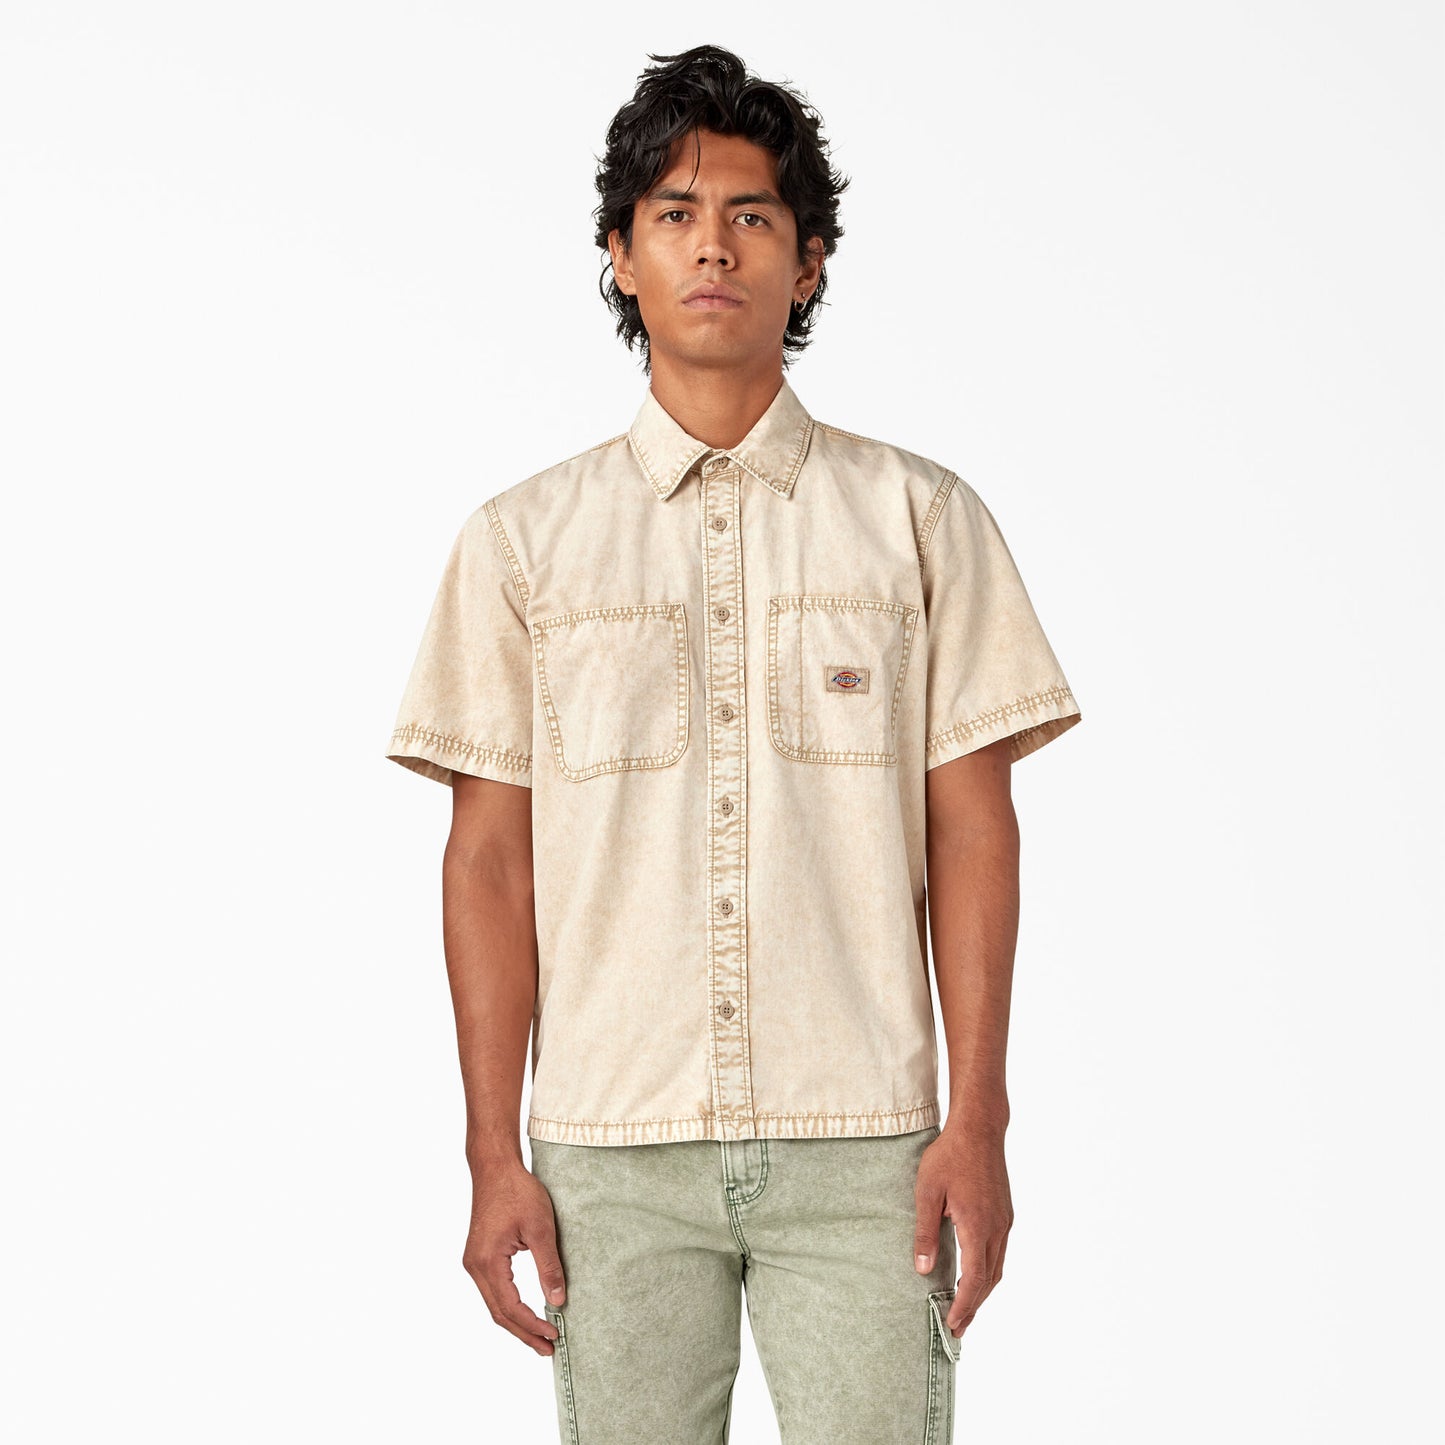 m tops - DICKIES - Newington Short Sleeve Shirt - PLENTY